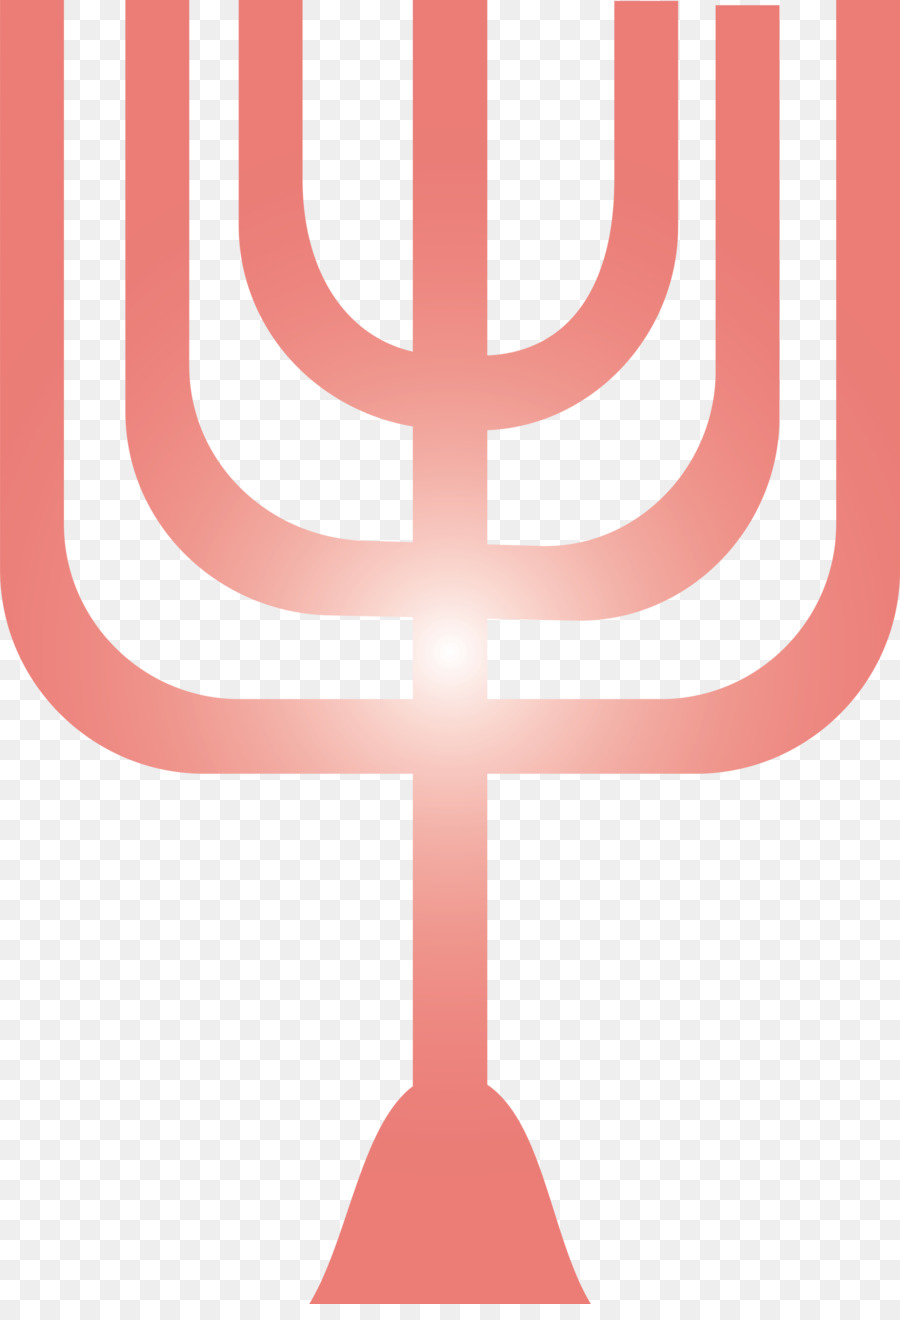 linea rosa menorah simbolo croce - 